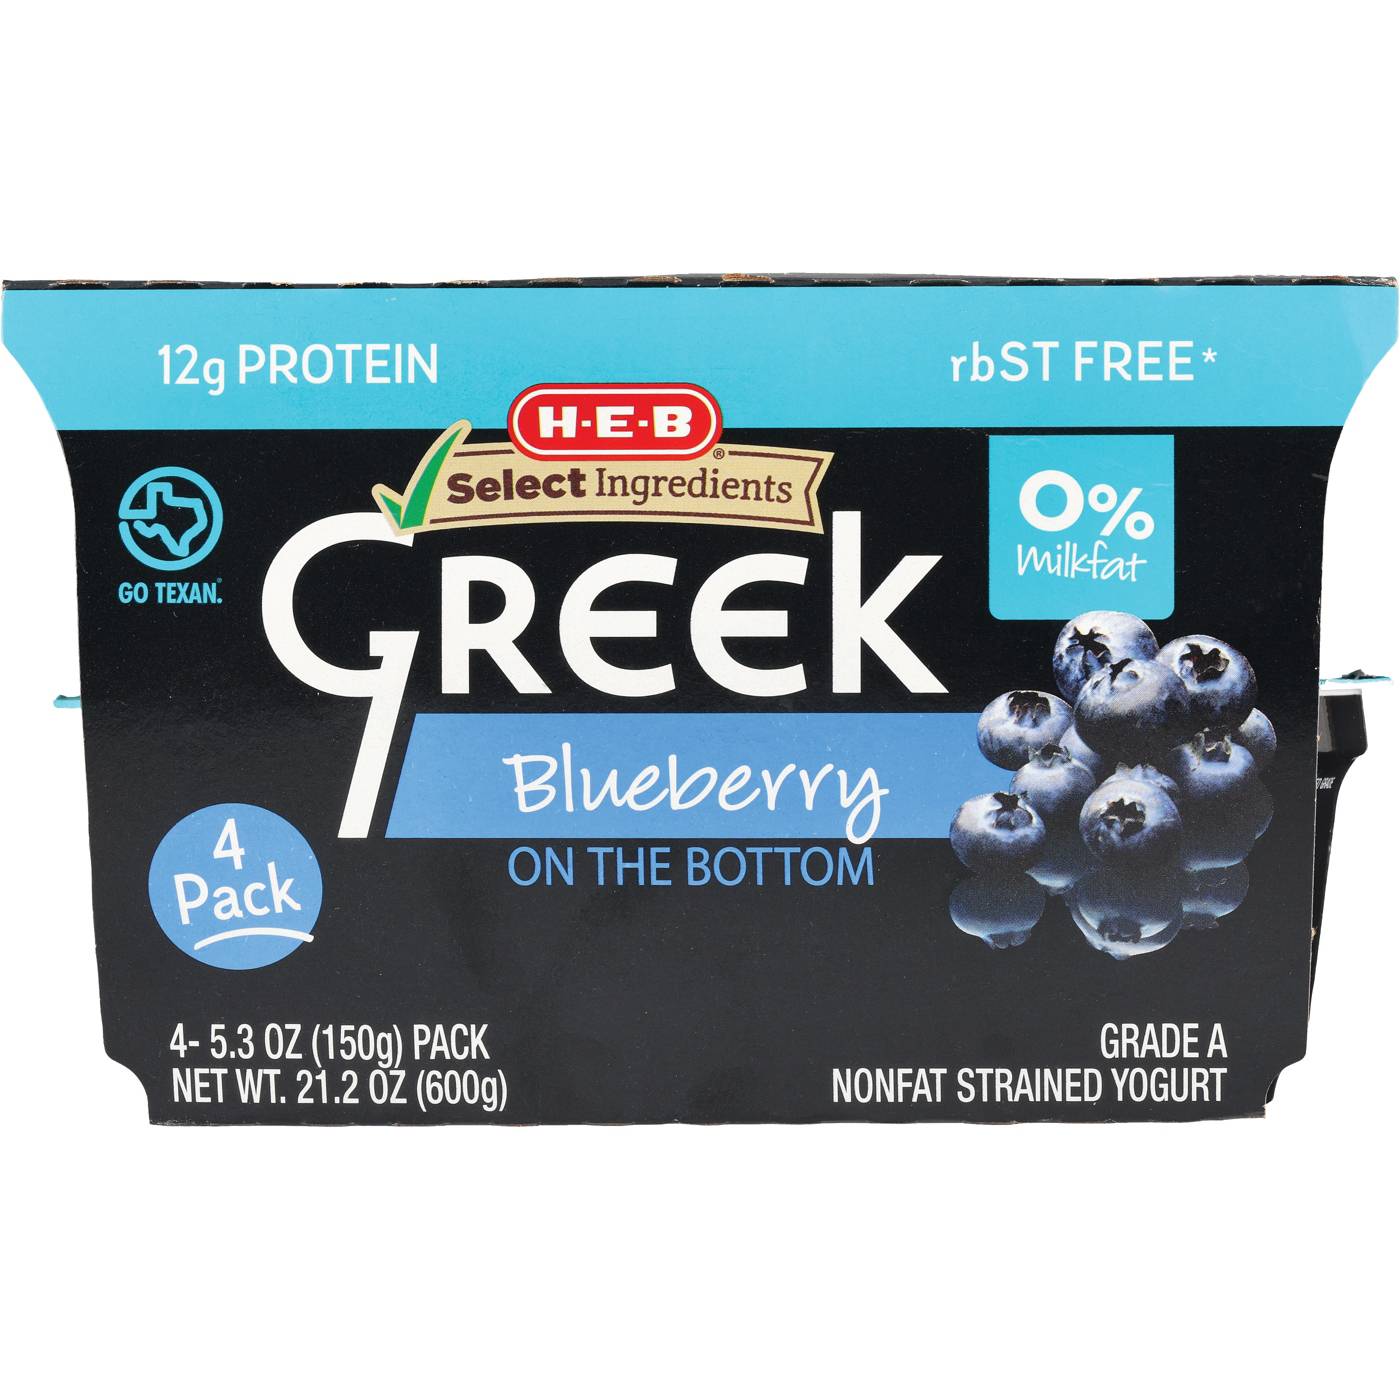 H-E-B Non-Fat Blueberry on the Bottom Greek Yogurt; image 1 of 2